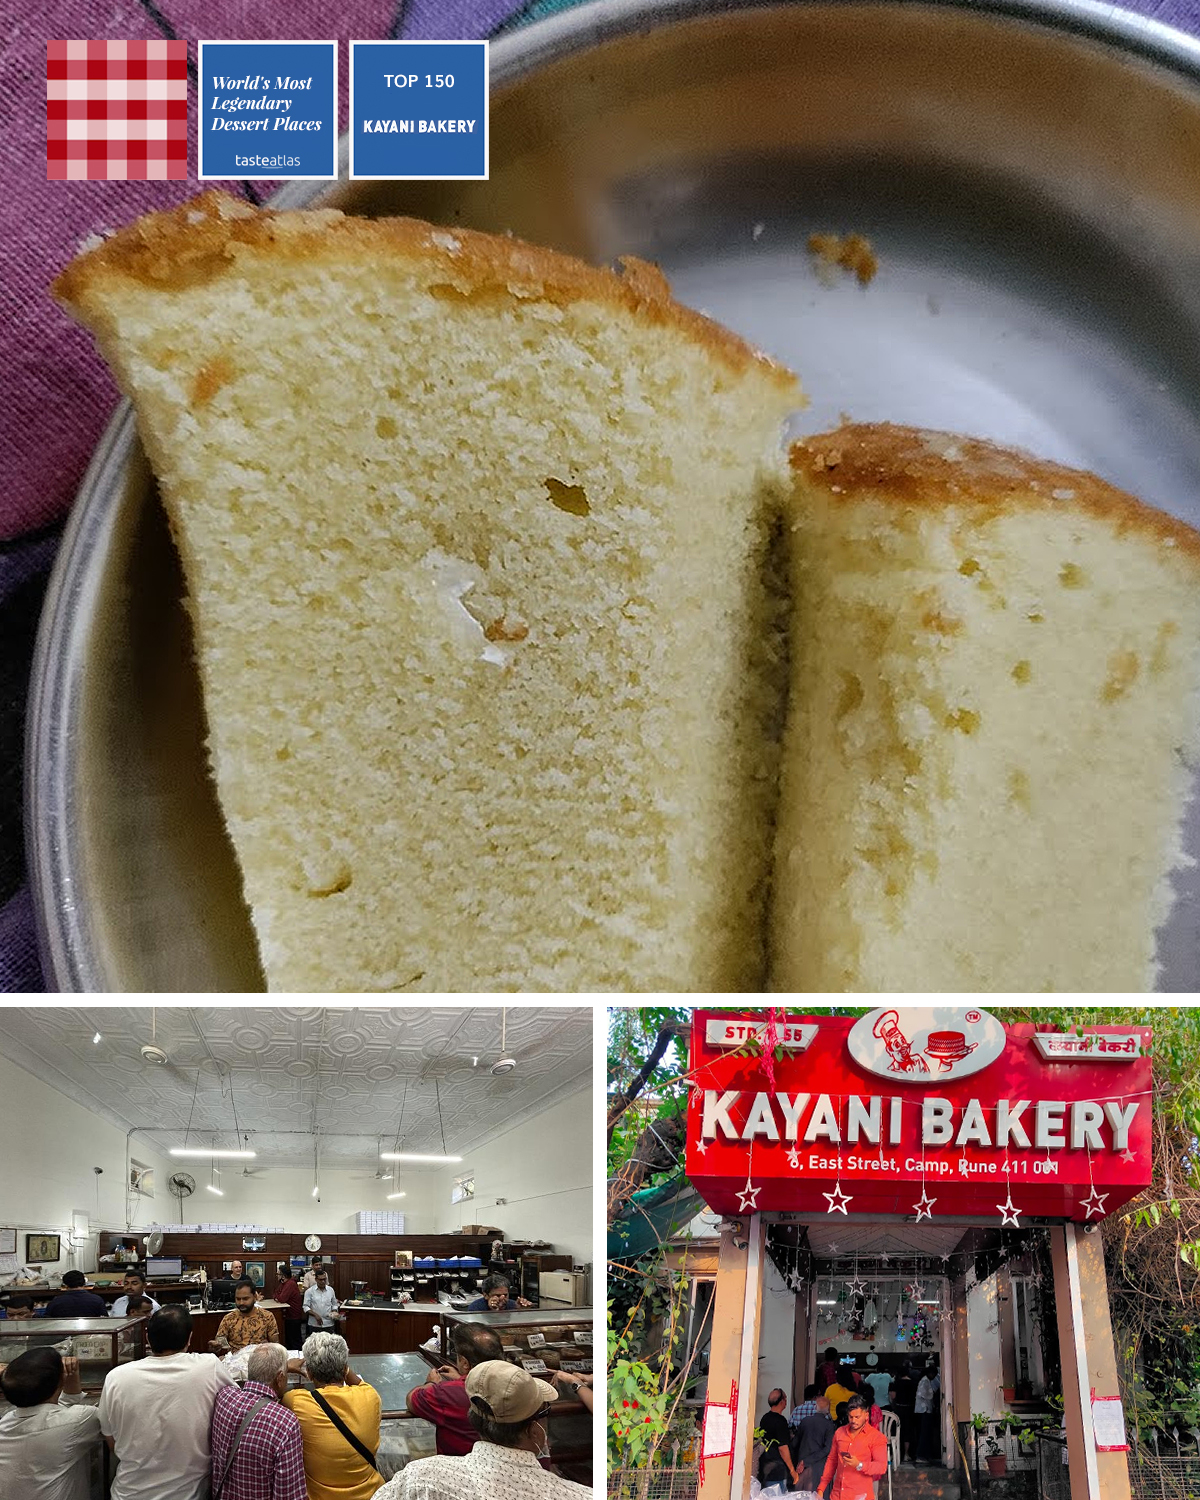 Kayani Bakery in Camp,Pune - Order Food Online - Best Bakeries in Pune -  Justdial